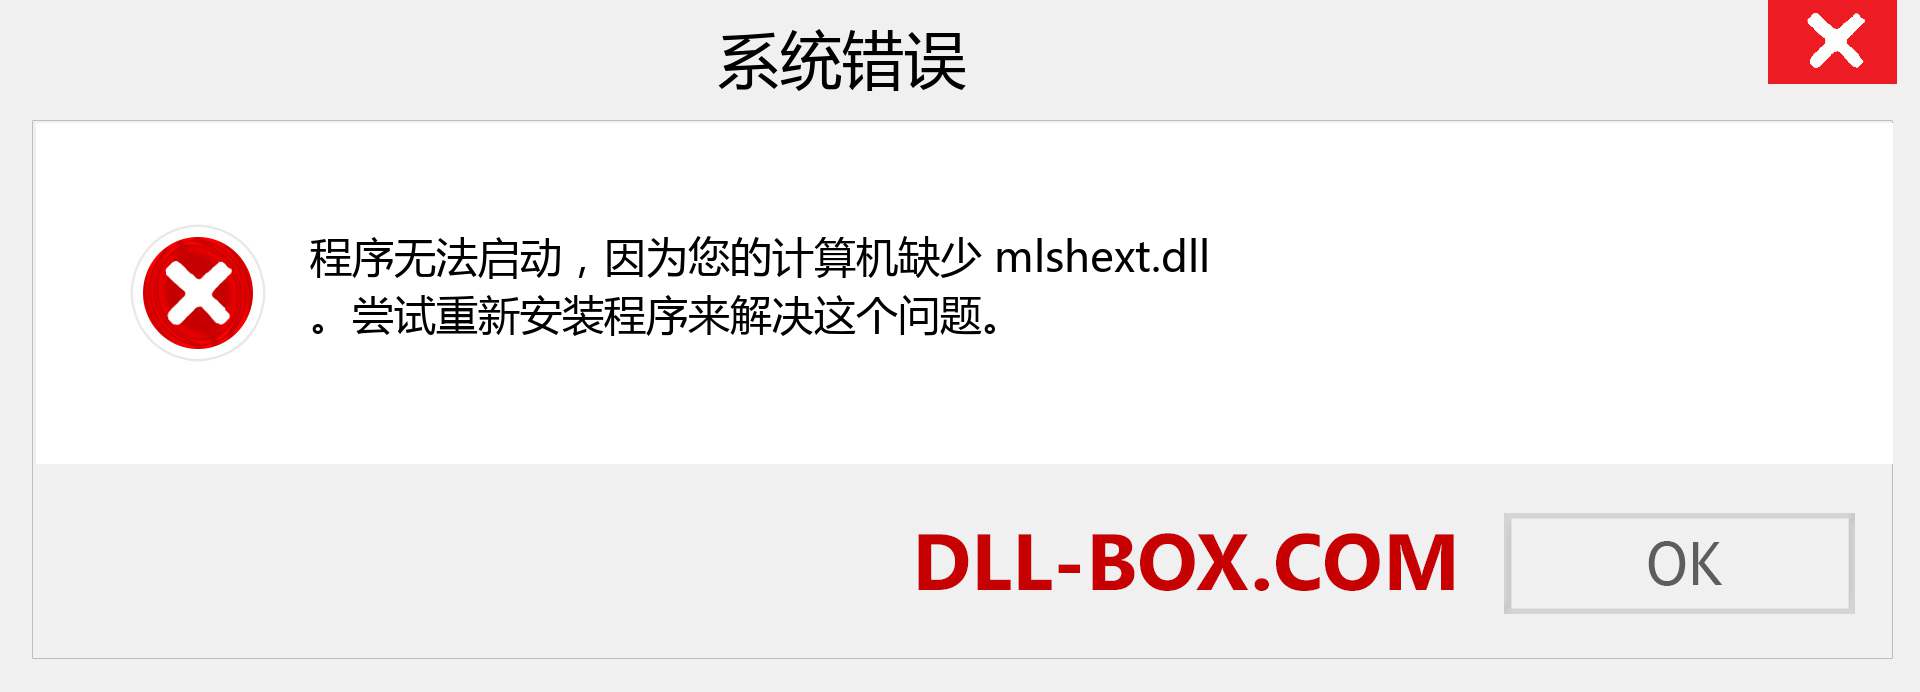 mlshext.dll 文件丢失？。 适用于 Windows 7、8、10 的下载 - 修复 Windows、照片、图像上的 mlshext dll 丢失错误